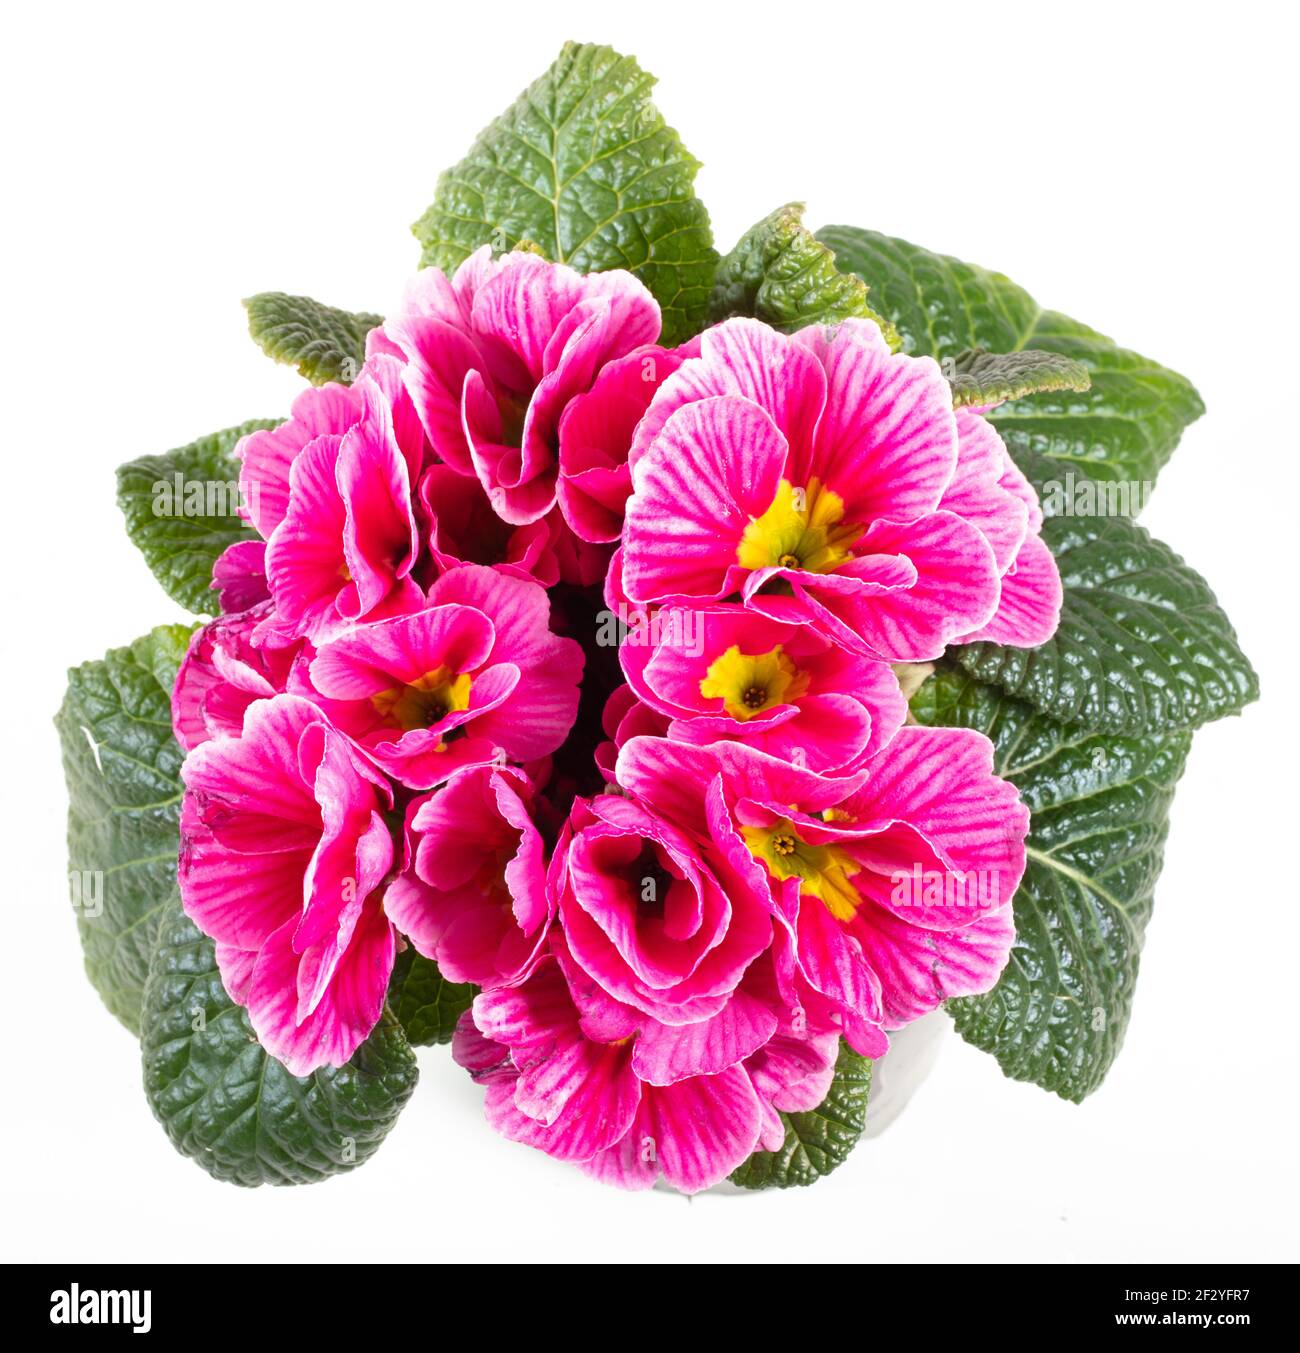 Primrose, Jordviva (Primula vulgaris) Stock Photo